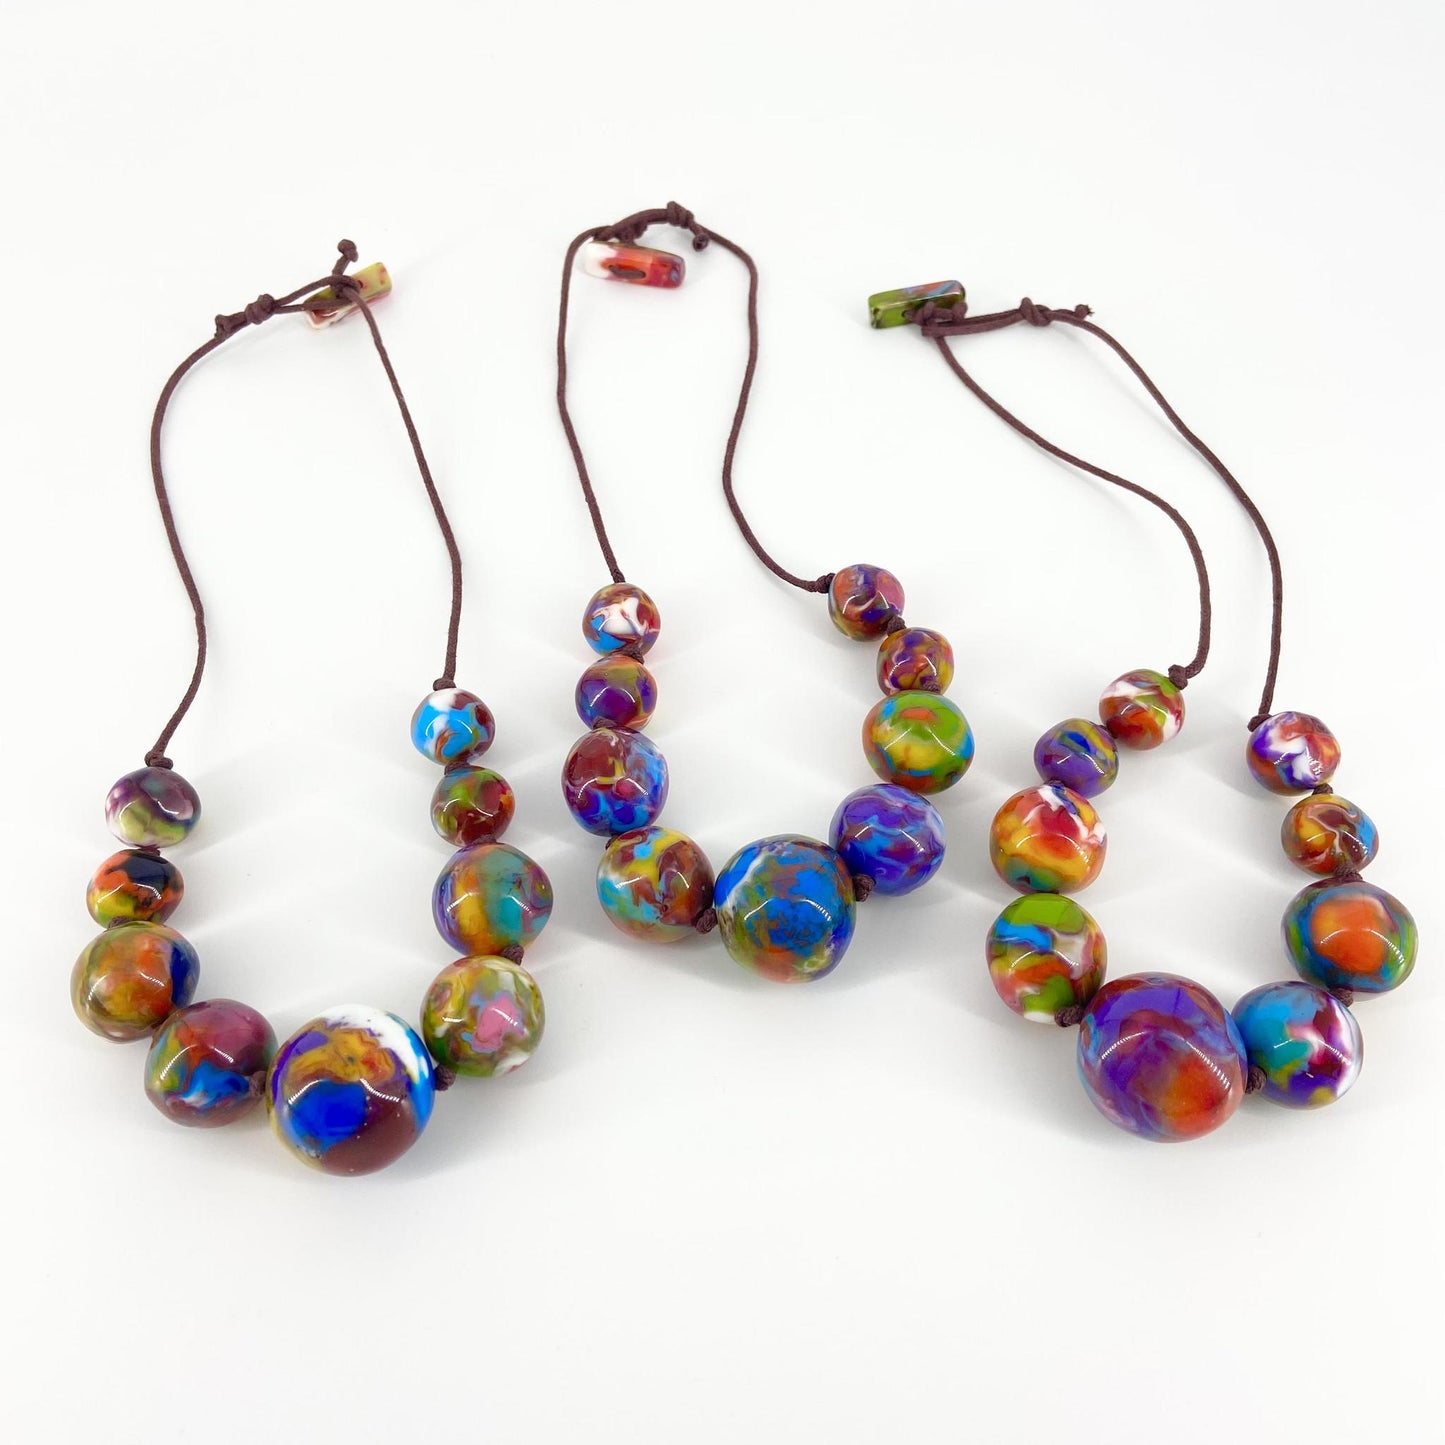 Necklace - Handknotted "Spheres" Resin Original - Handmade